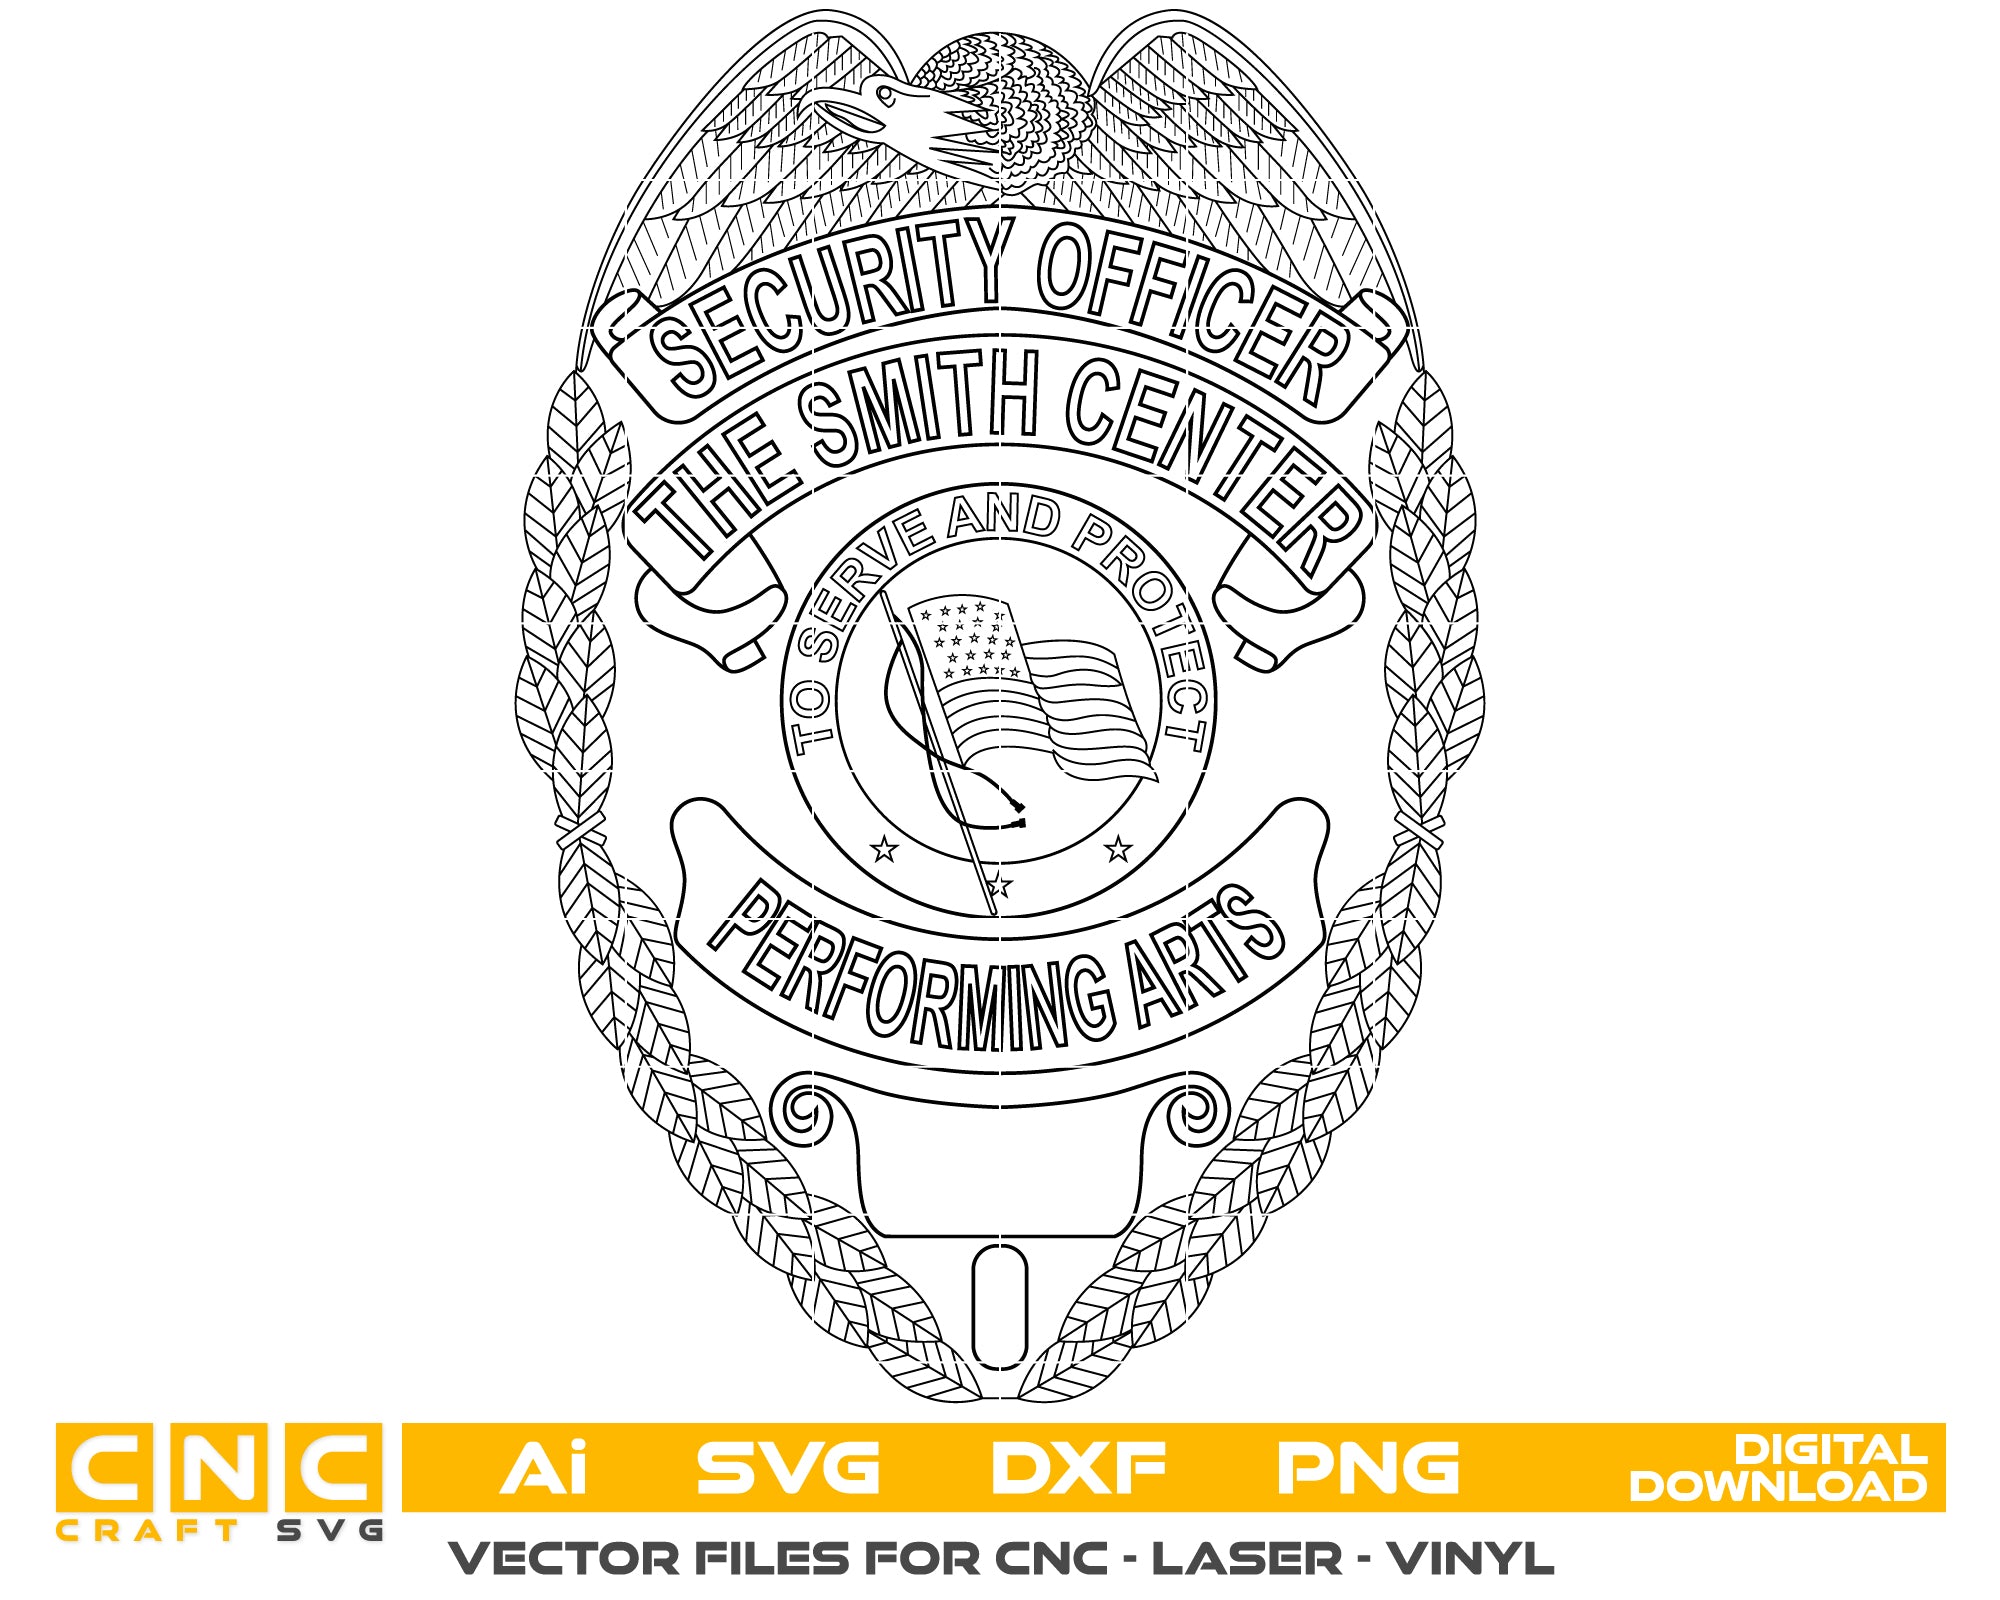 Smith Center Security Badge vector file